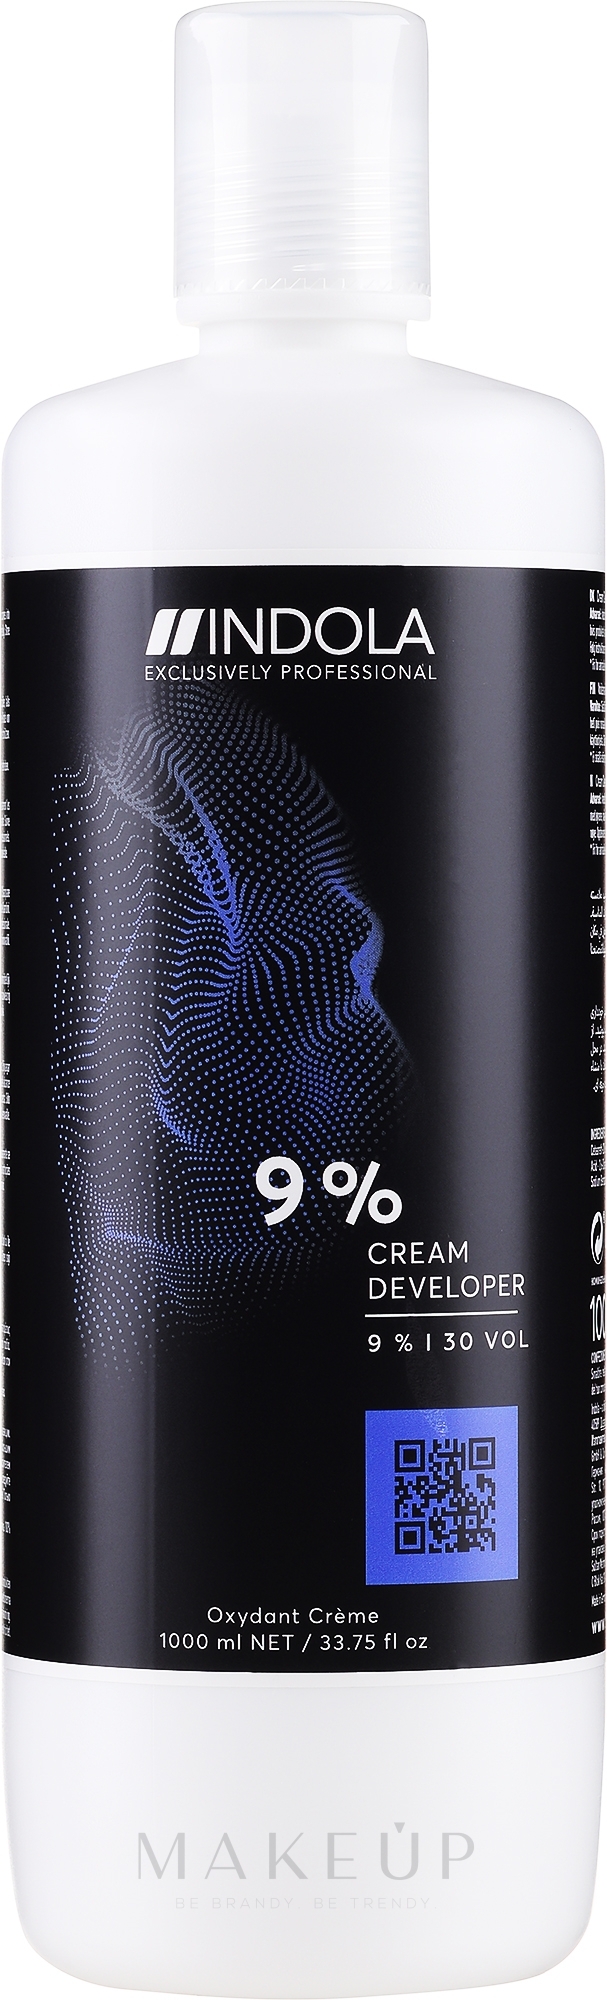 Entwicklerlotion 9% - Indola Profession Cream Developer 9% 30 vol — Foto 1000 ml